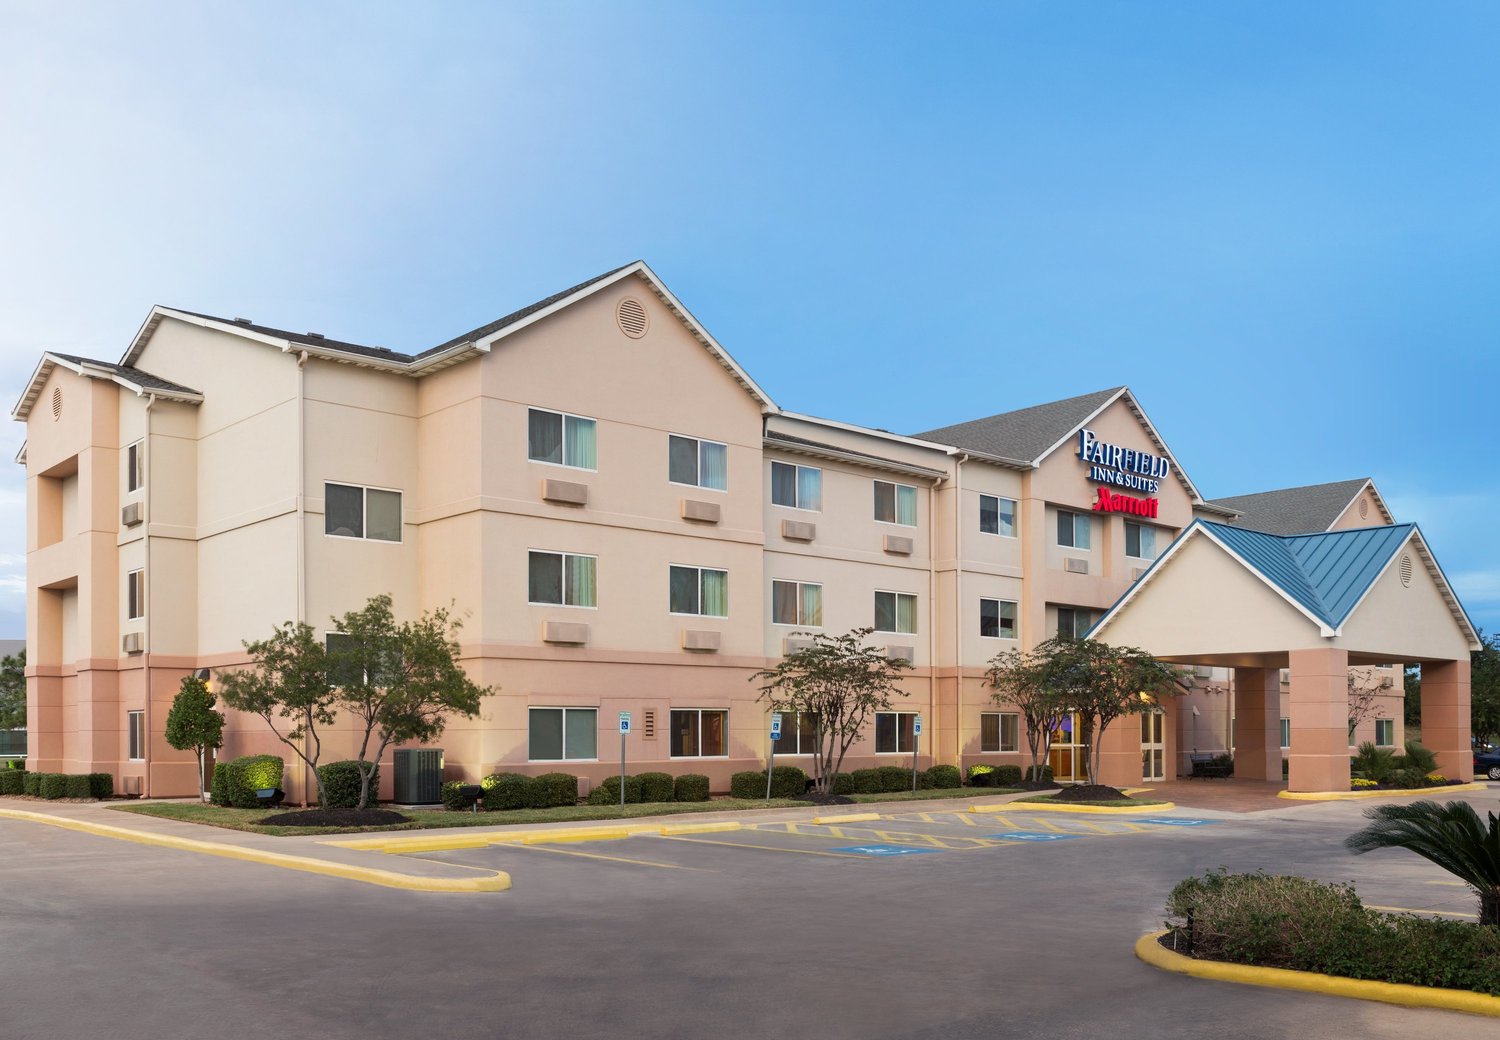 Fairfield Inn Suites Marriott Houston North Cypress Station